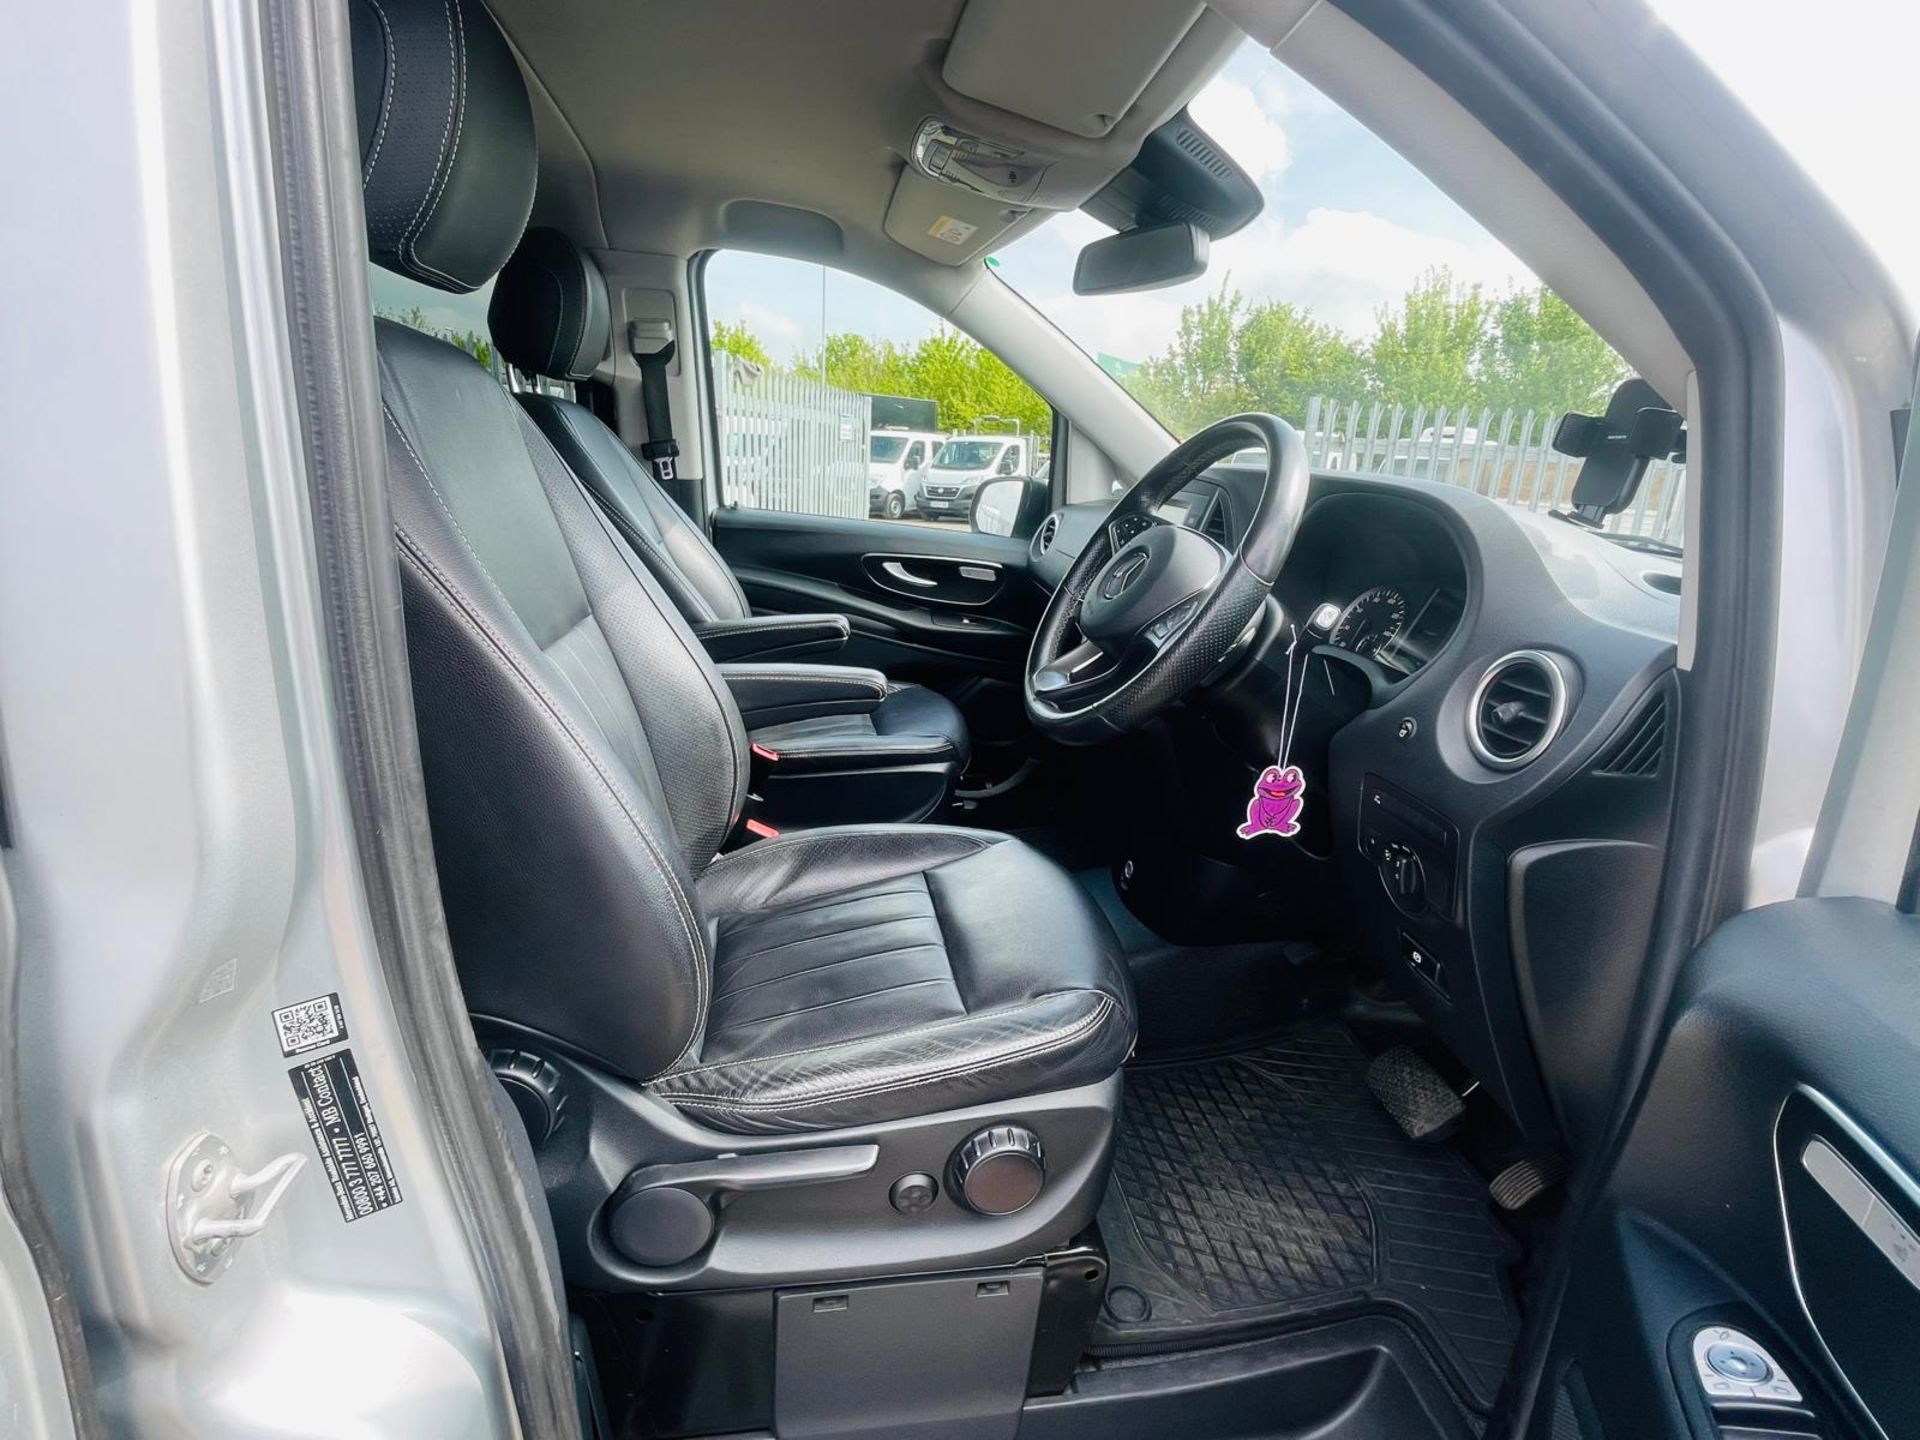 Mercedes-Benz Vito Premium 2.1 119 CDI 7G Tronic Crew Cab LWB Automatic 2019'19 Reg'- Alloy Wheels - Image 15 of 31